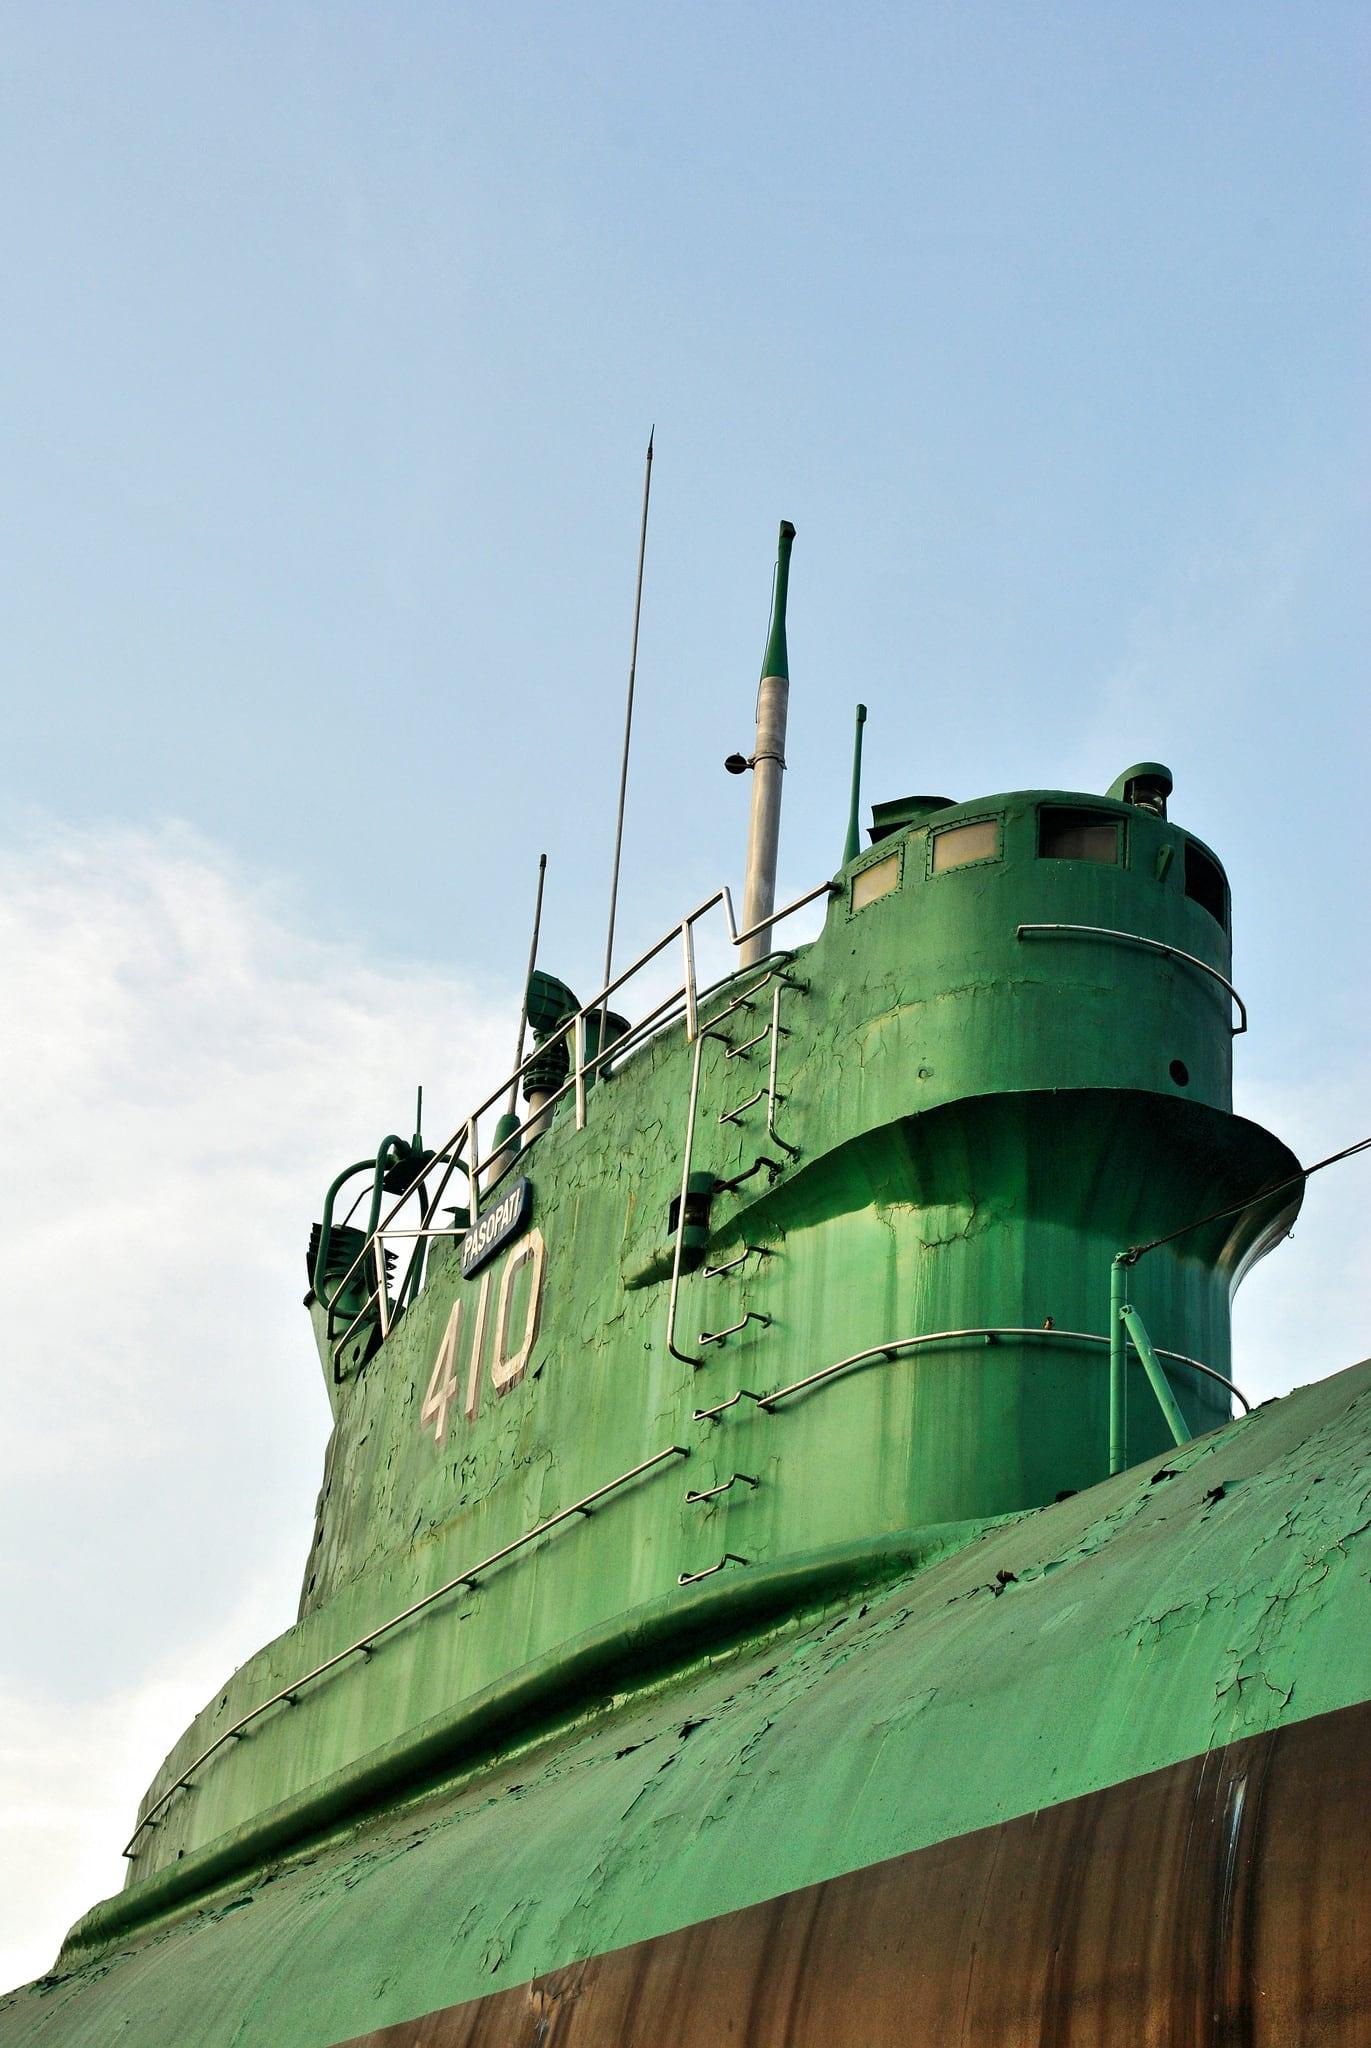 Image de Monumen Kapal Selam. monument submarine monumen surabaya kapalselam monkasel